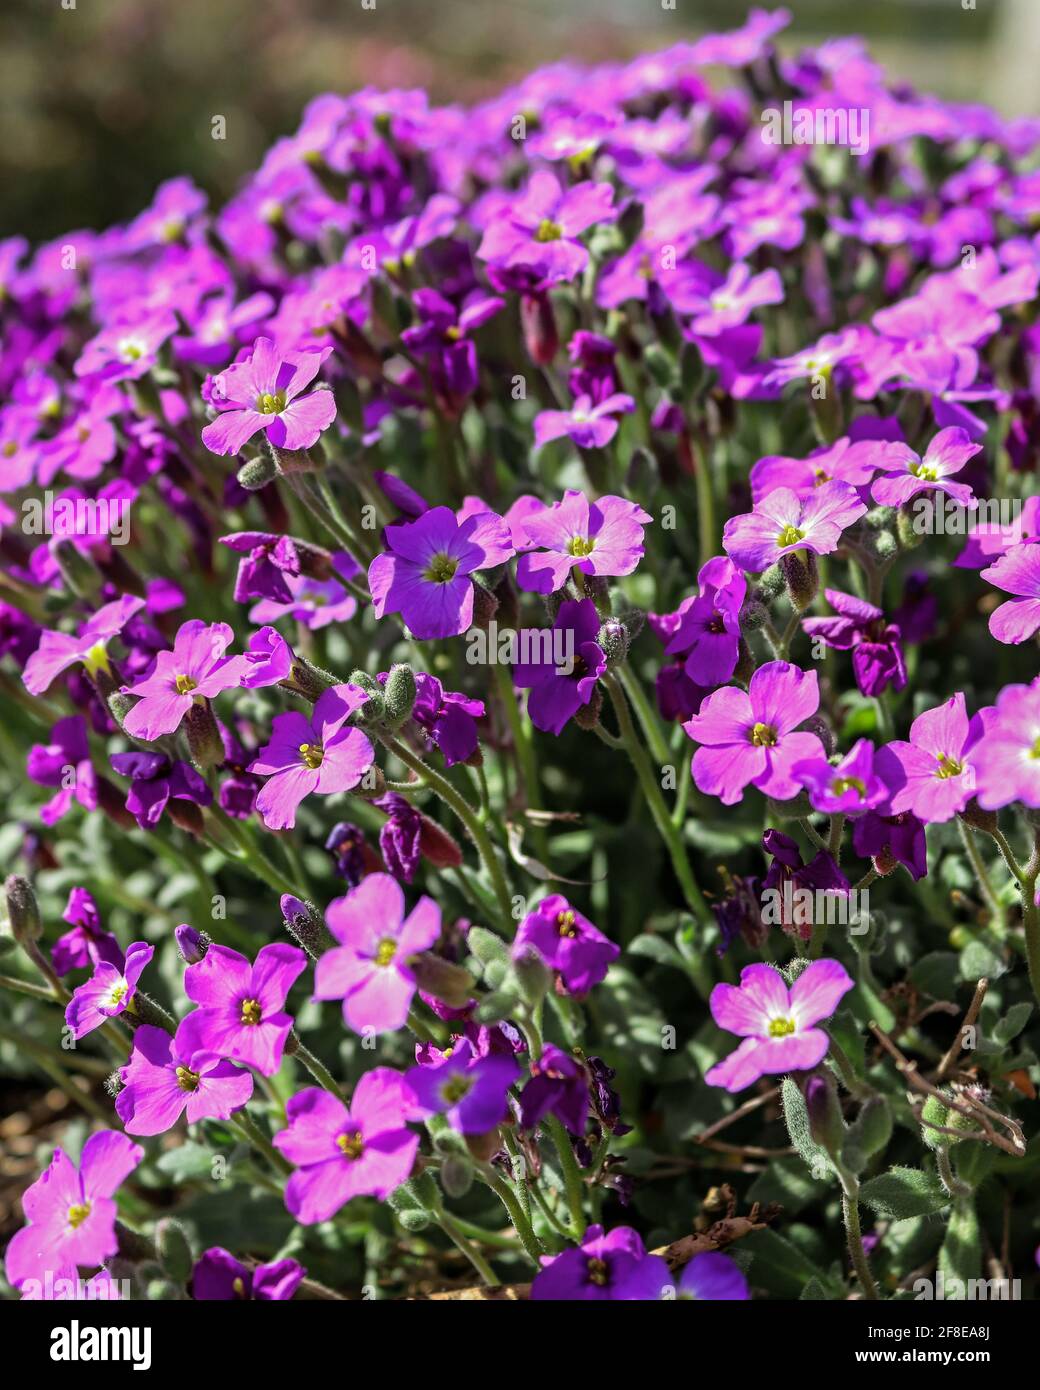 Purple flowers in the spring sun shine Stock Photo